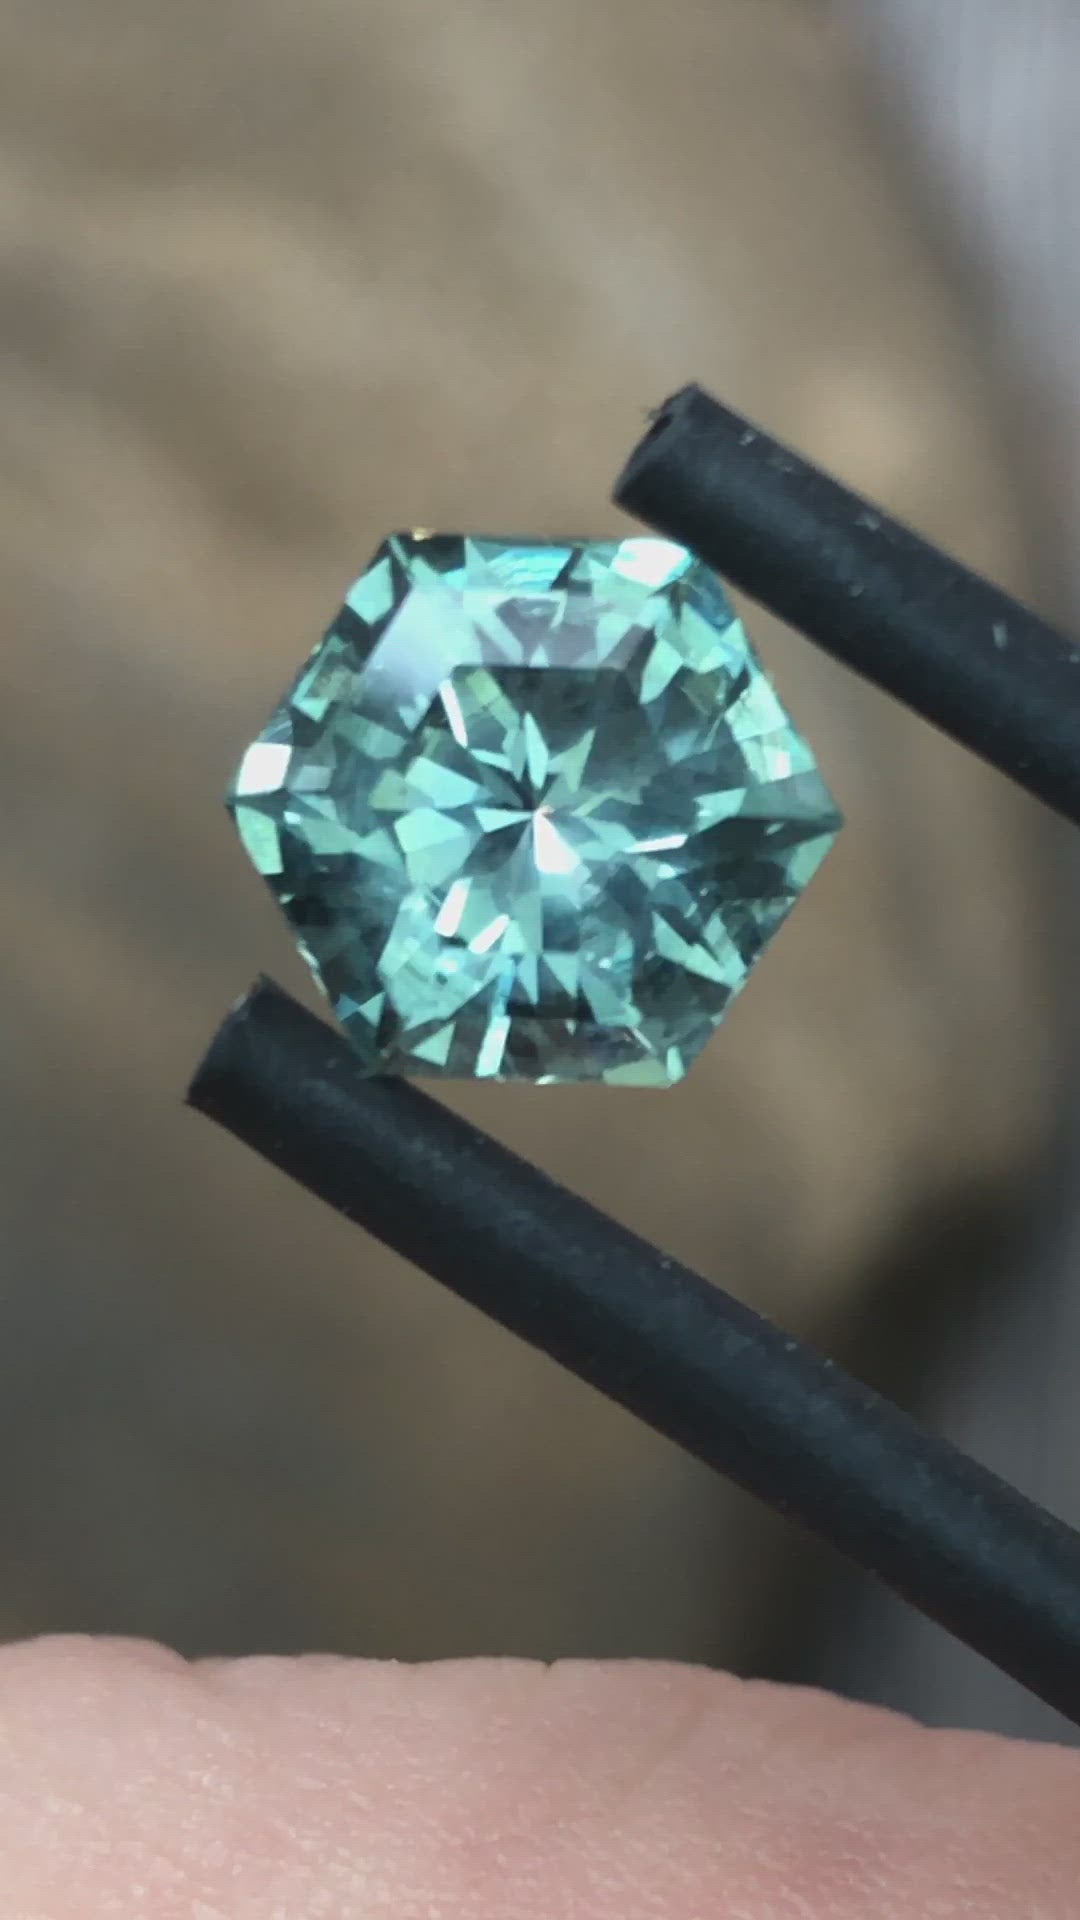 Montana-Saphir, sechseckig, 7,8 x 6,7 mm, 1,66 Karat – Blaugrün – Präzisionsschliff